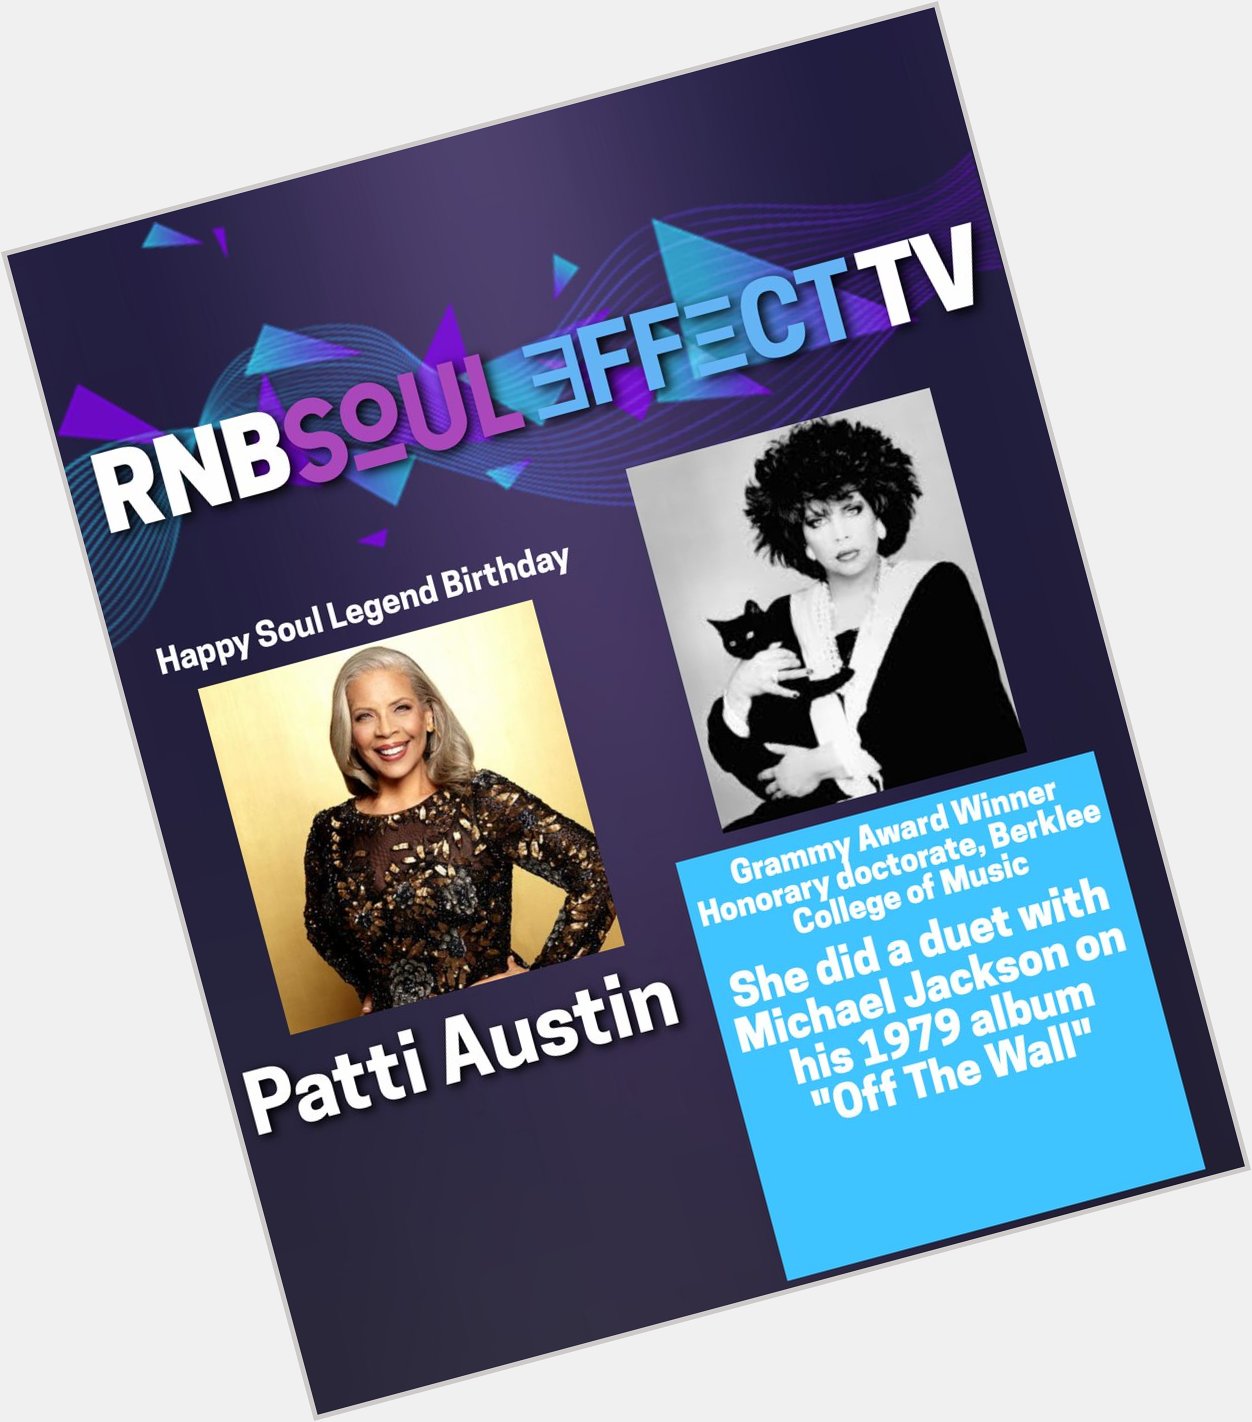 Happy Soul Legend Birthday
Patti Austin 